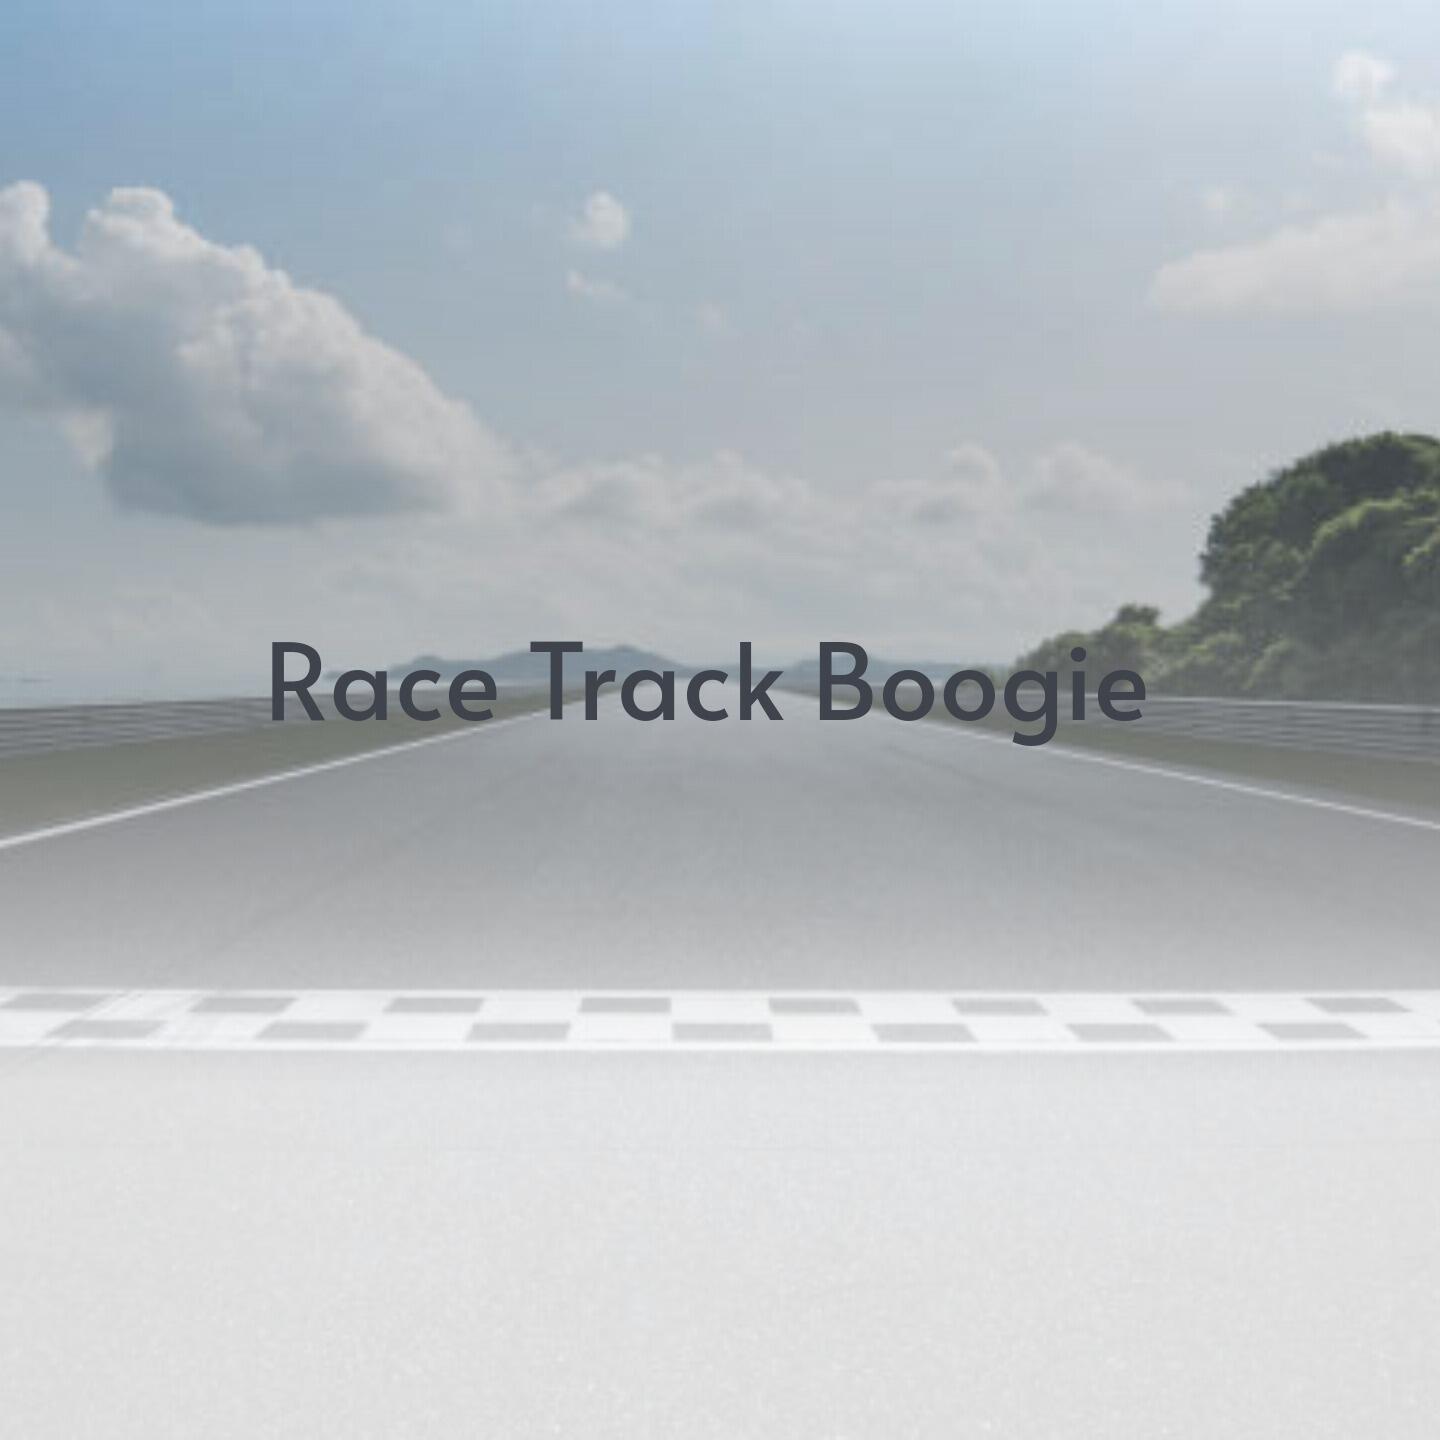 Track Image